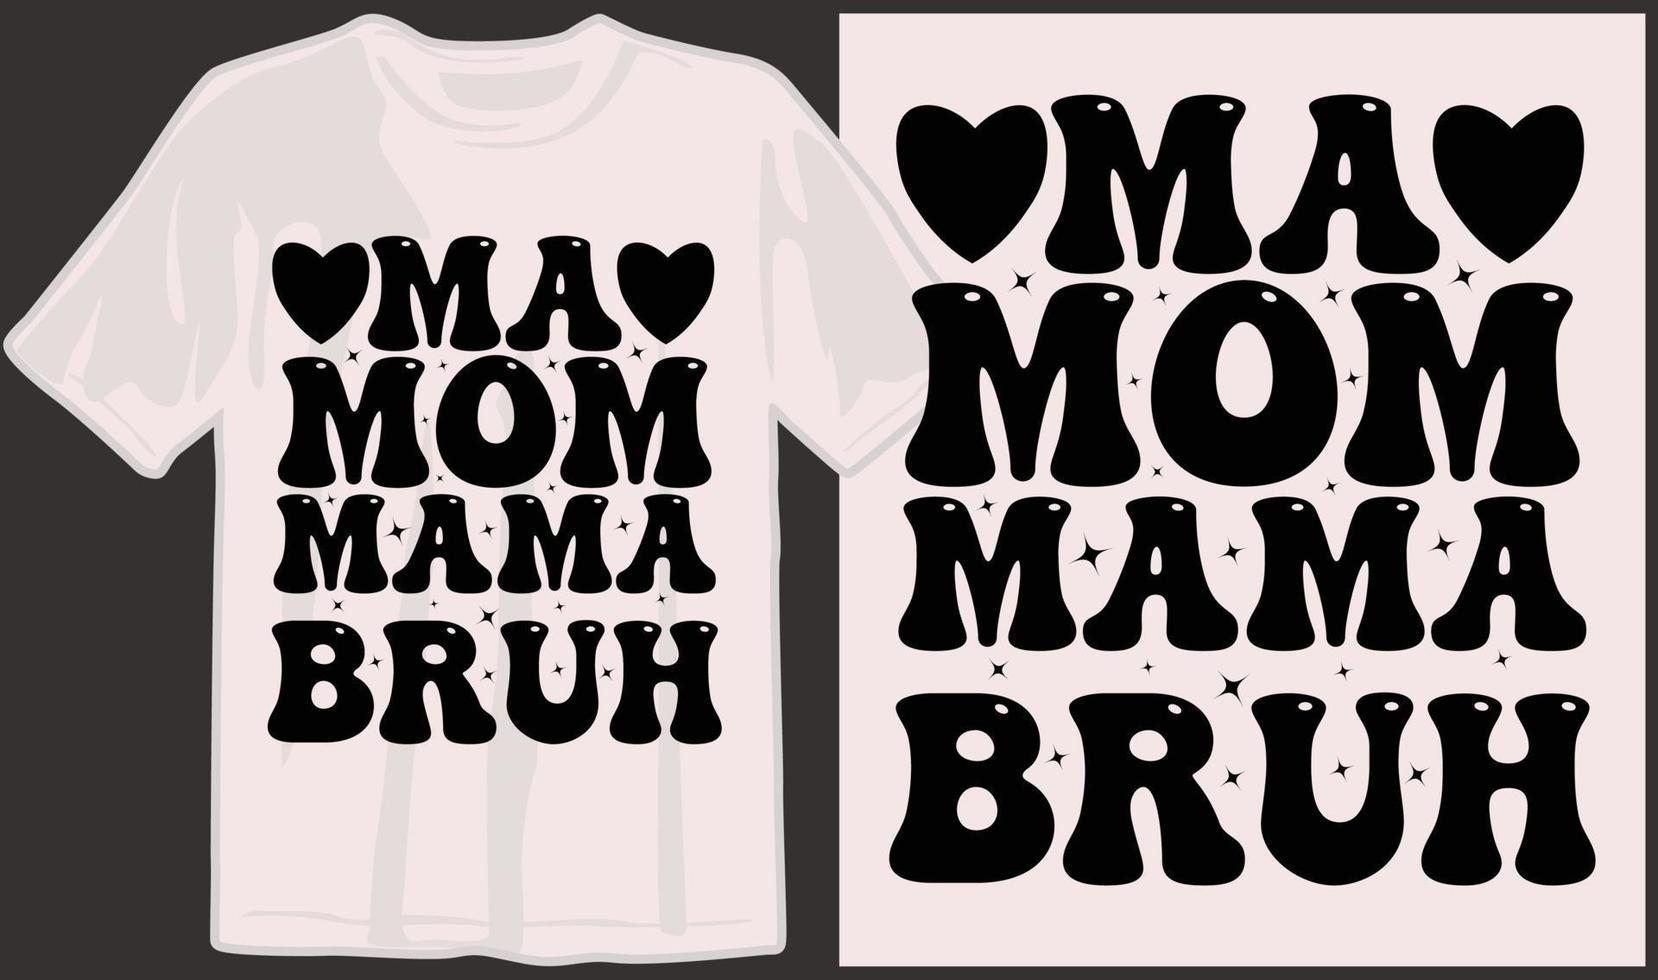 Mutter Tag, Mutter, Mutter, Mama, Familie svg t Hemd Design, Typografie t Hemd Designs vektor